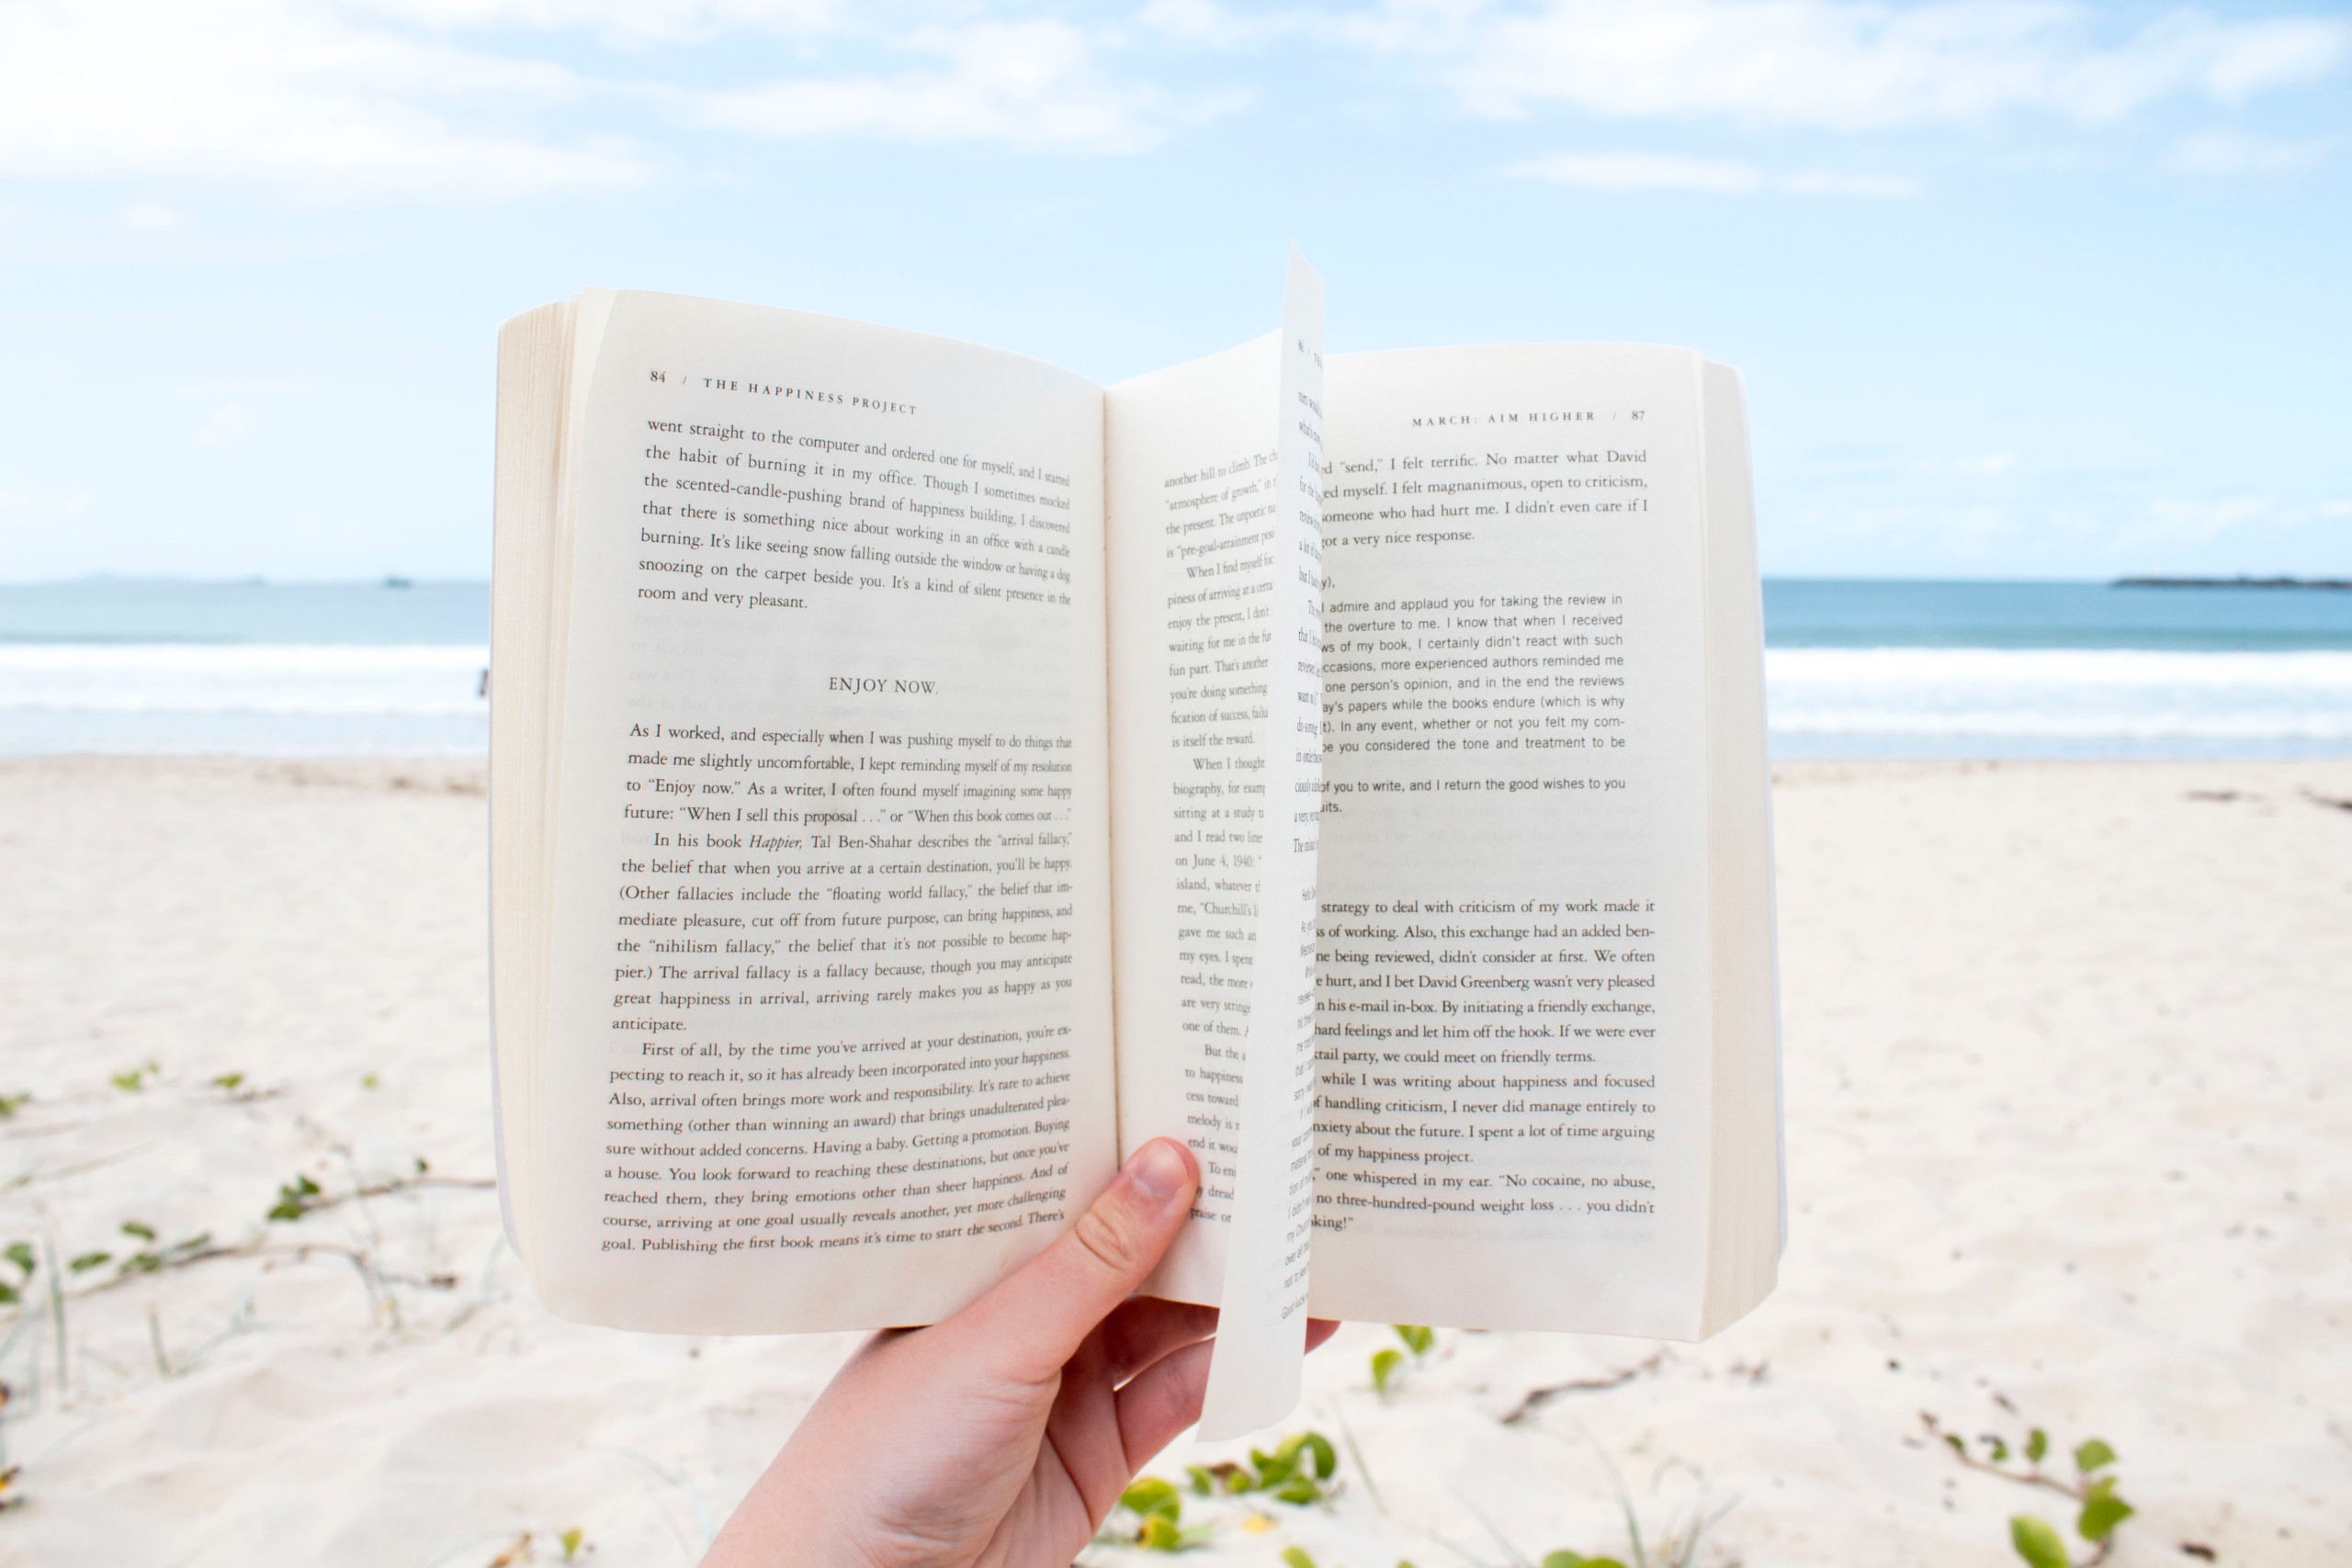 L'inglese per l'estate: reading